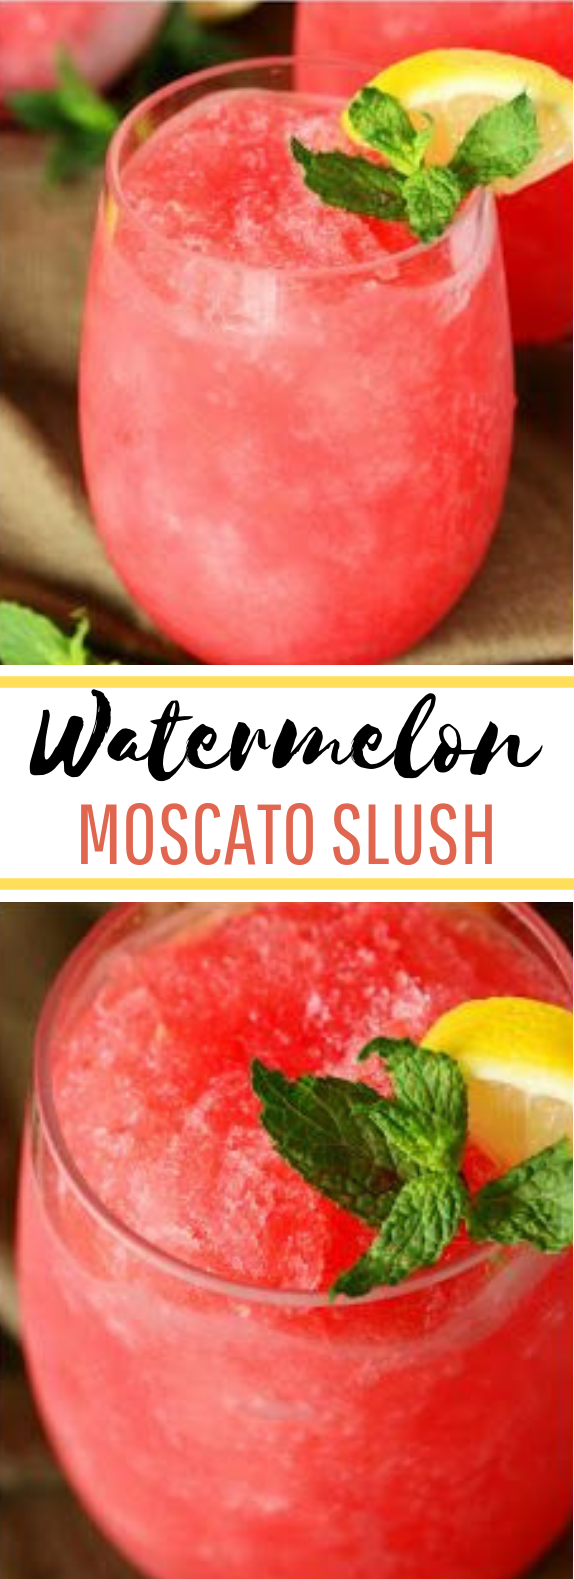 Watermelon-Moscato Slush #drinks #slush